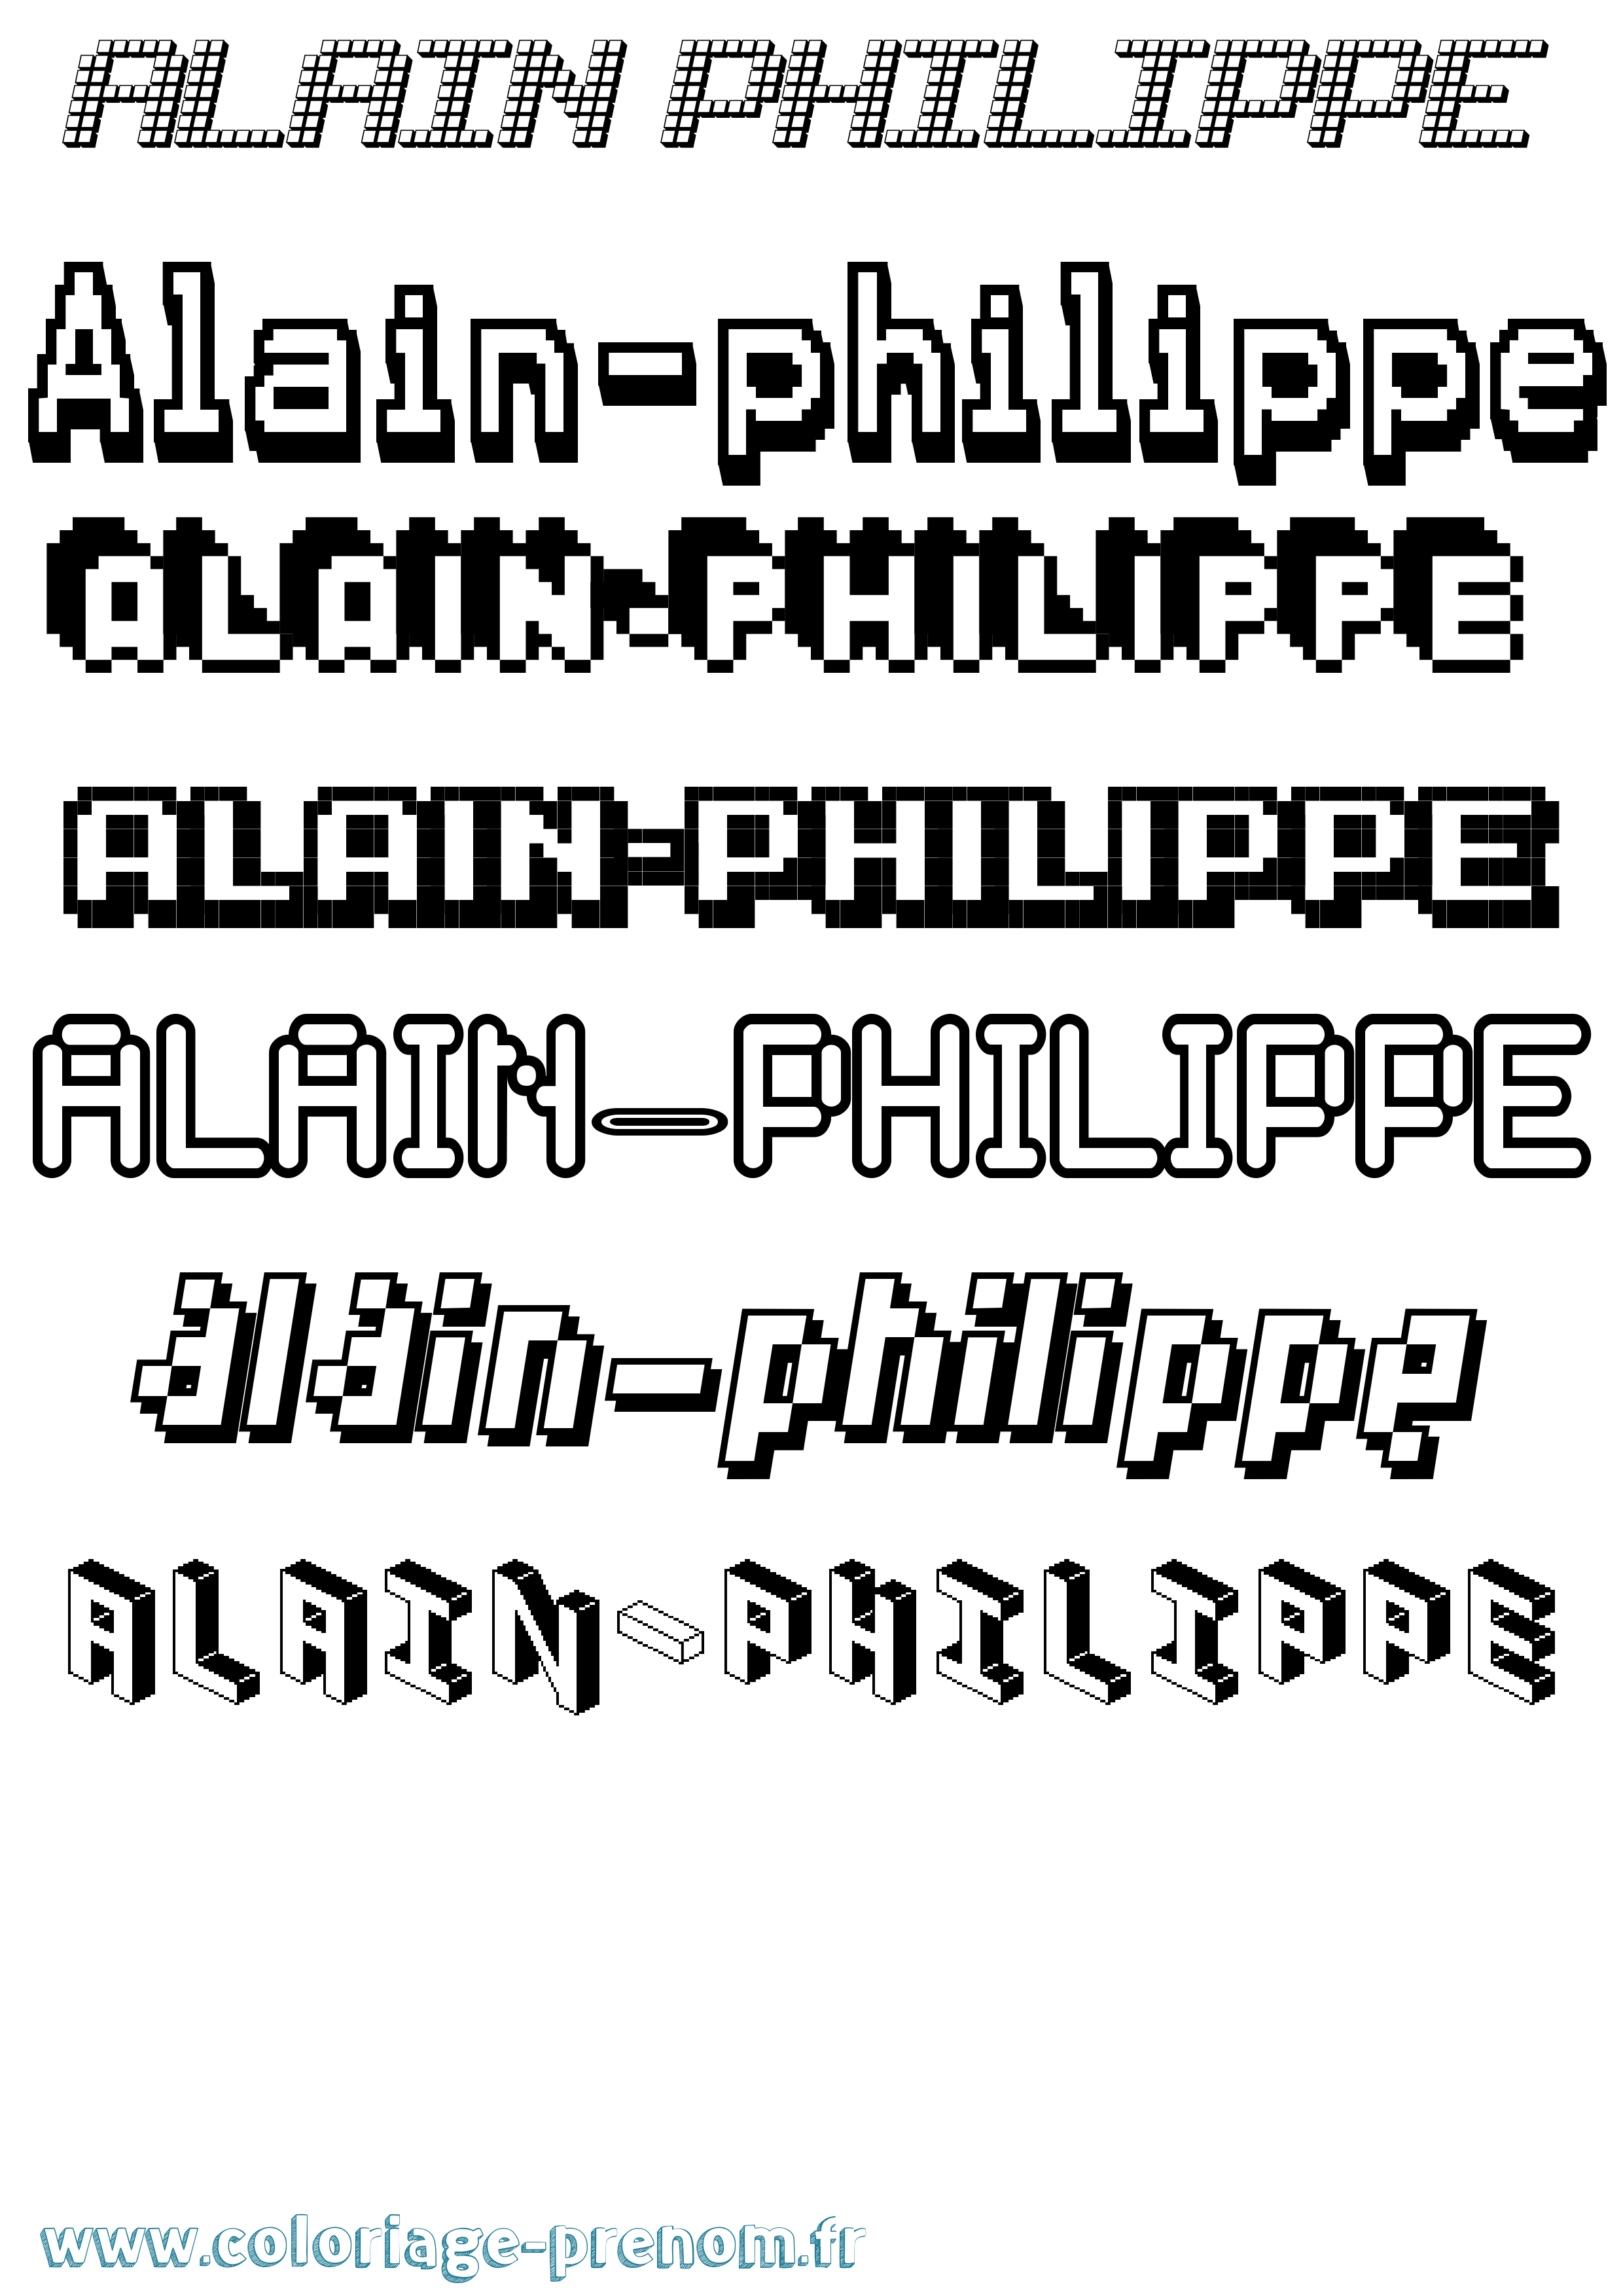 Coloriage prénom Alain-Philippe Pixel